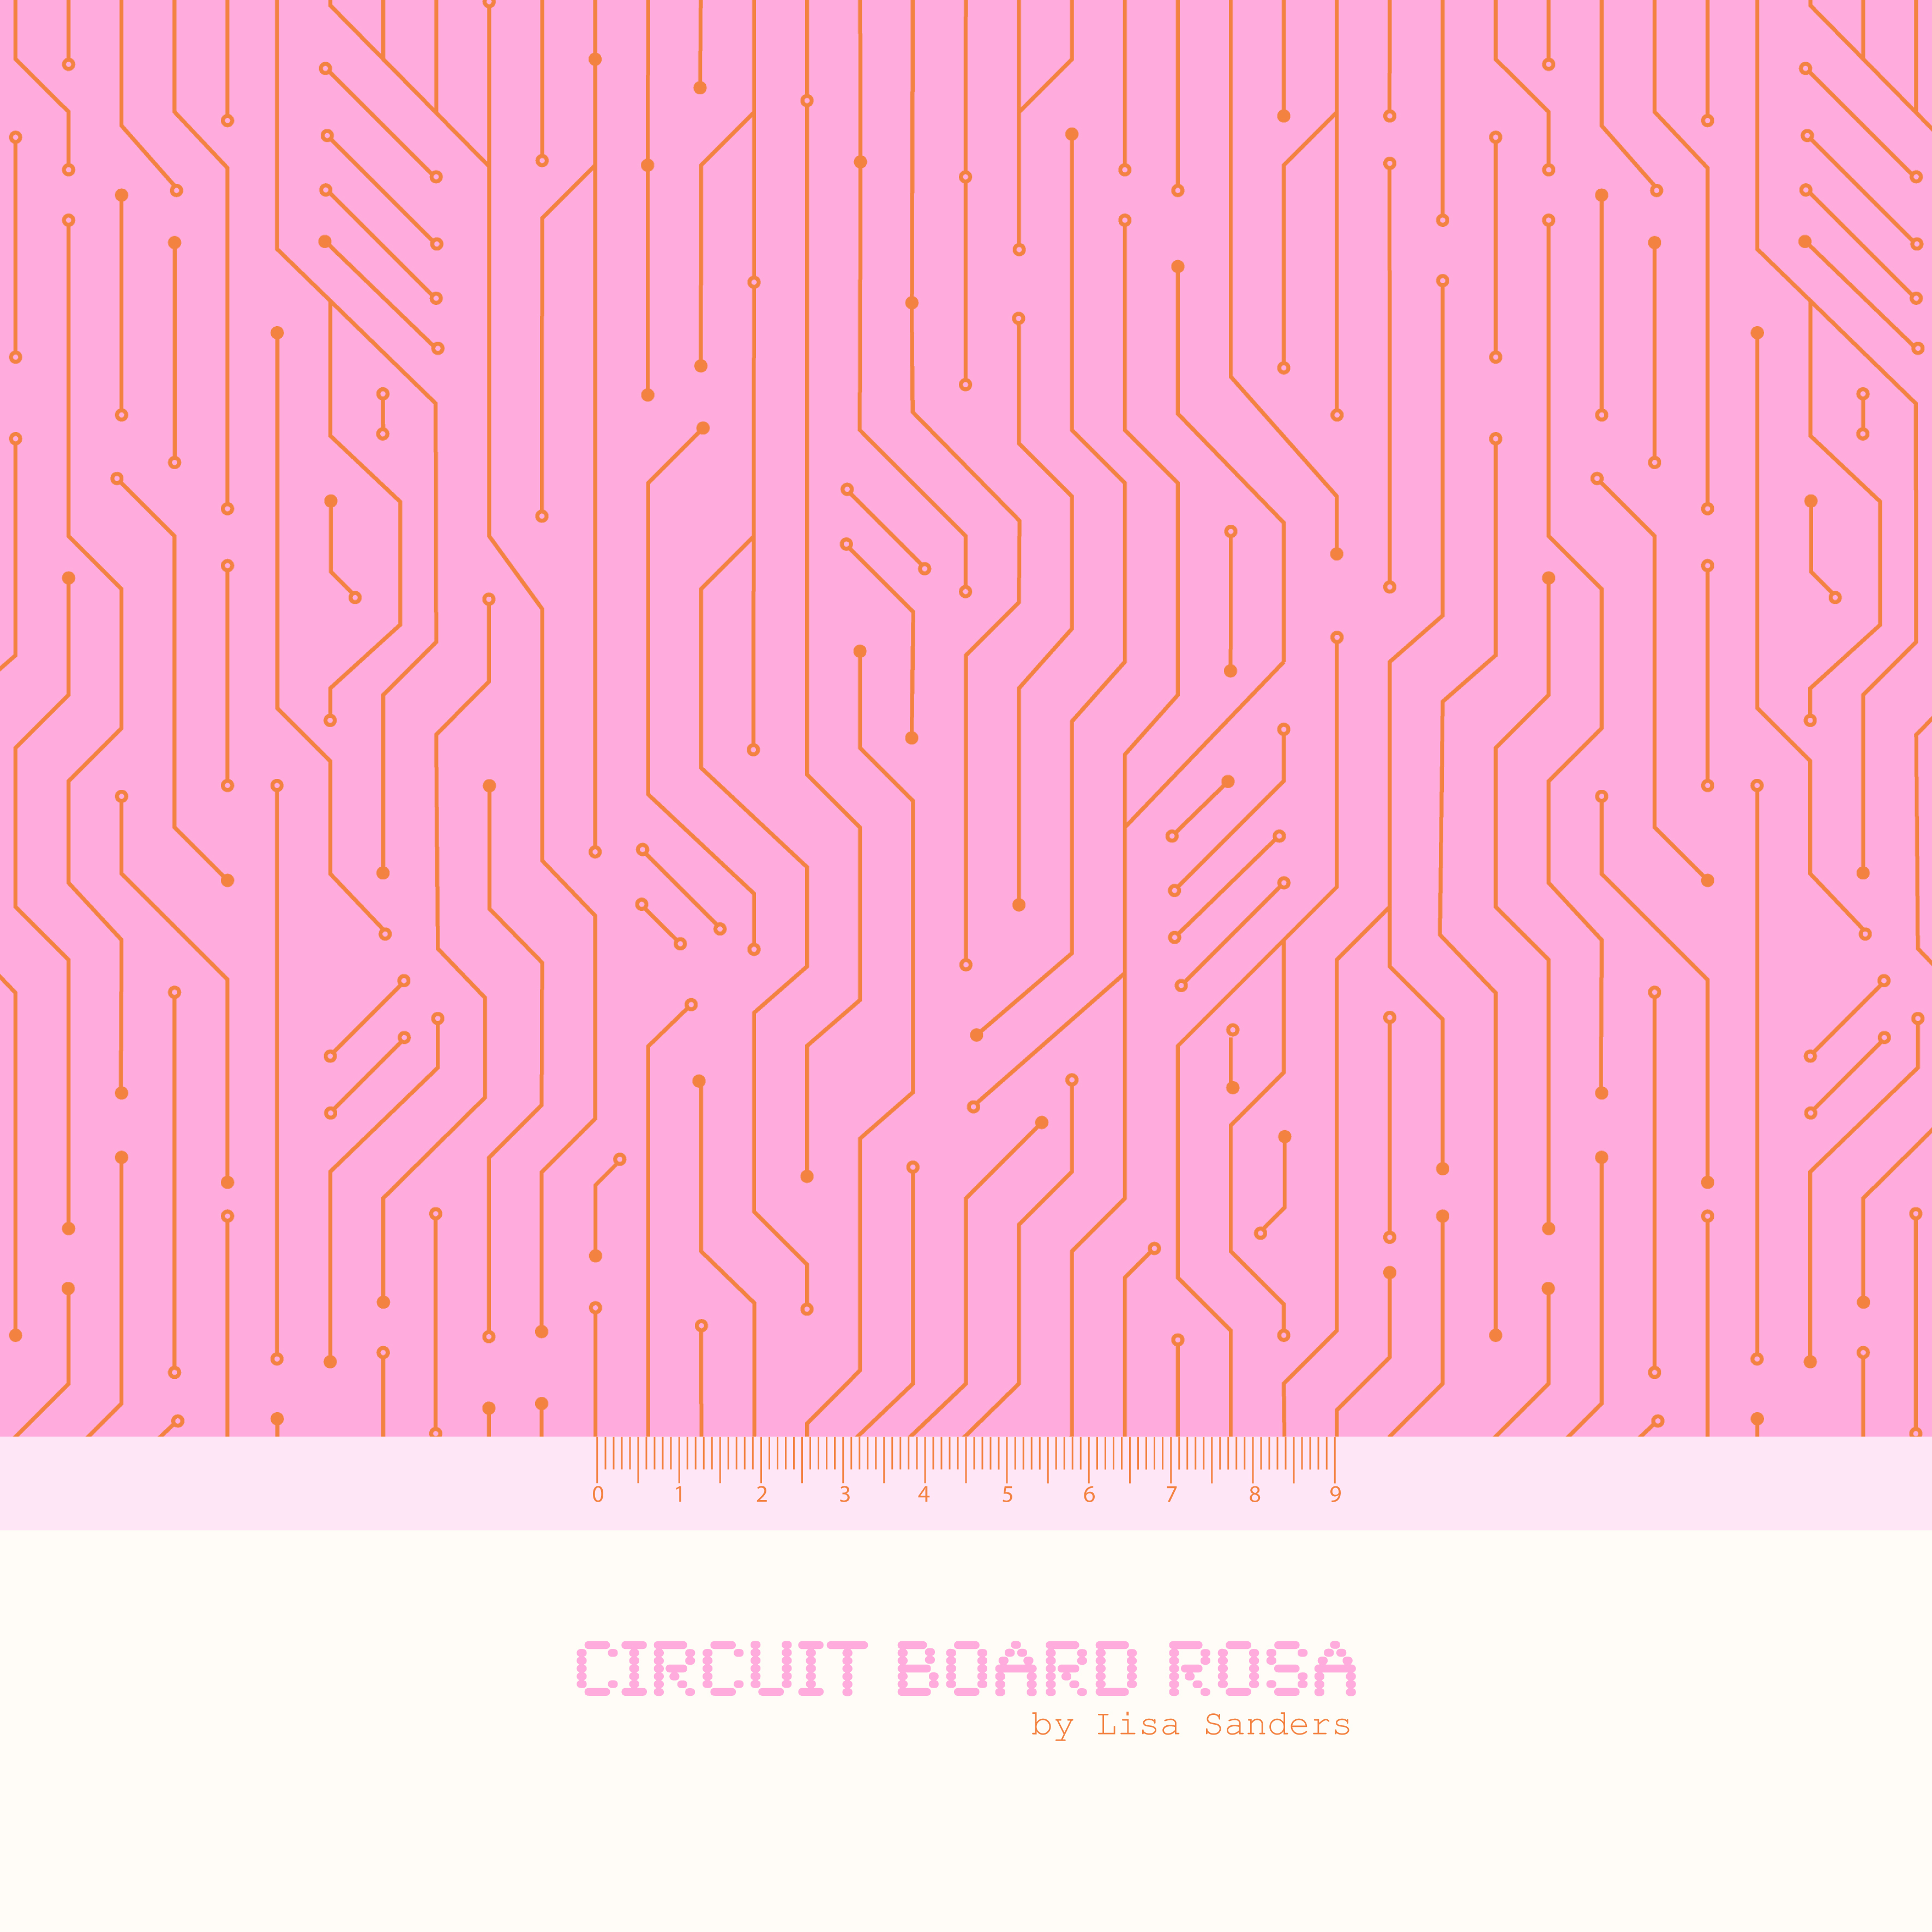 Circuit Board Rosa